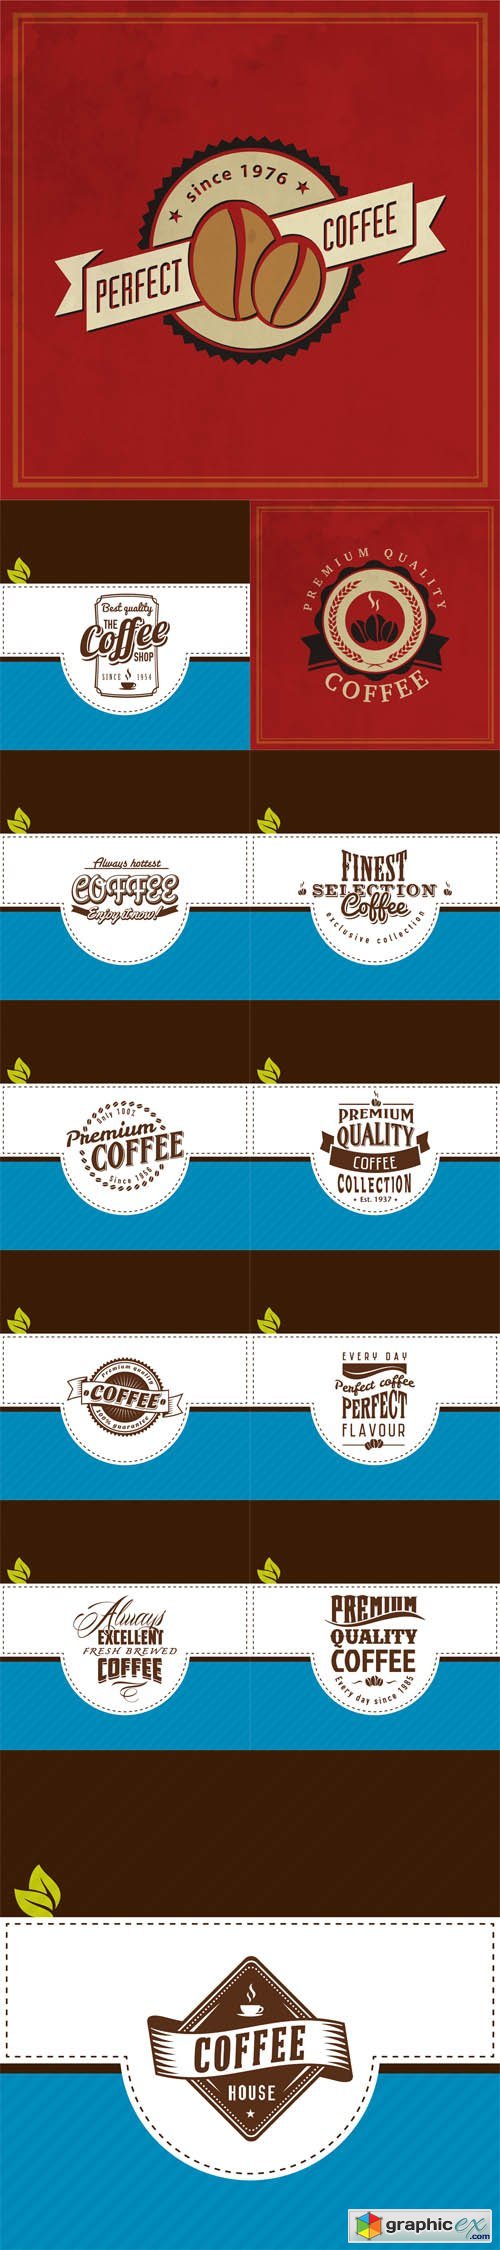 Coffee Shop Logo Design Element in Vintage Style